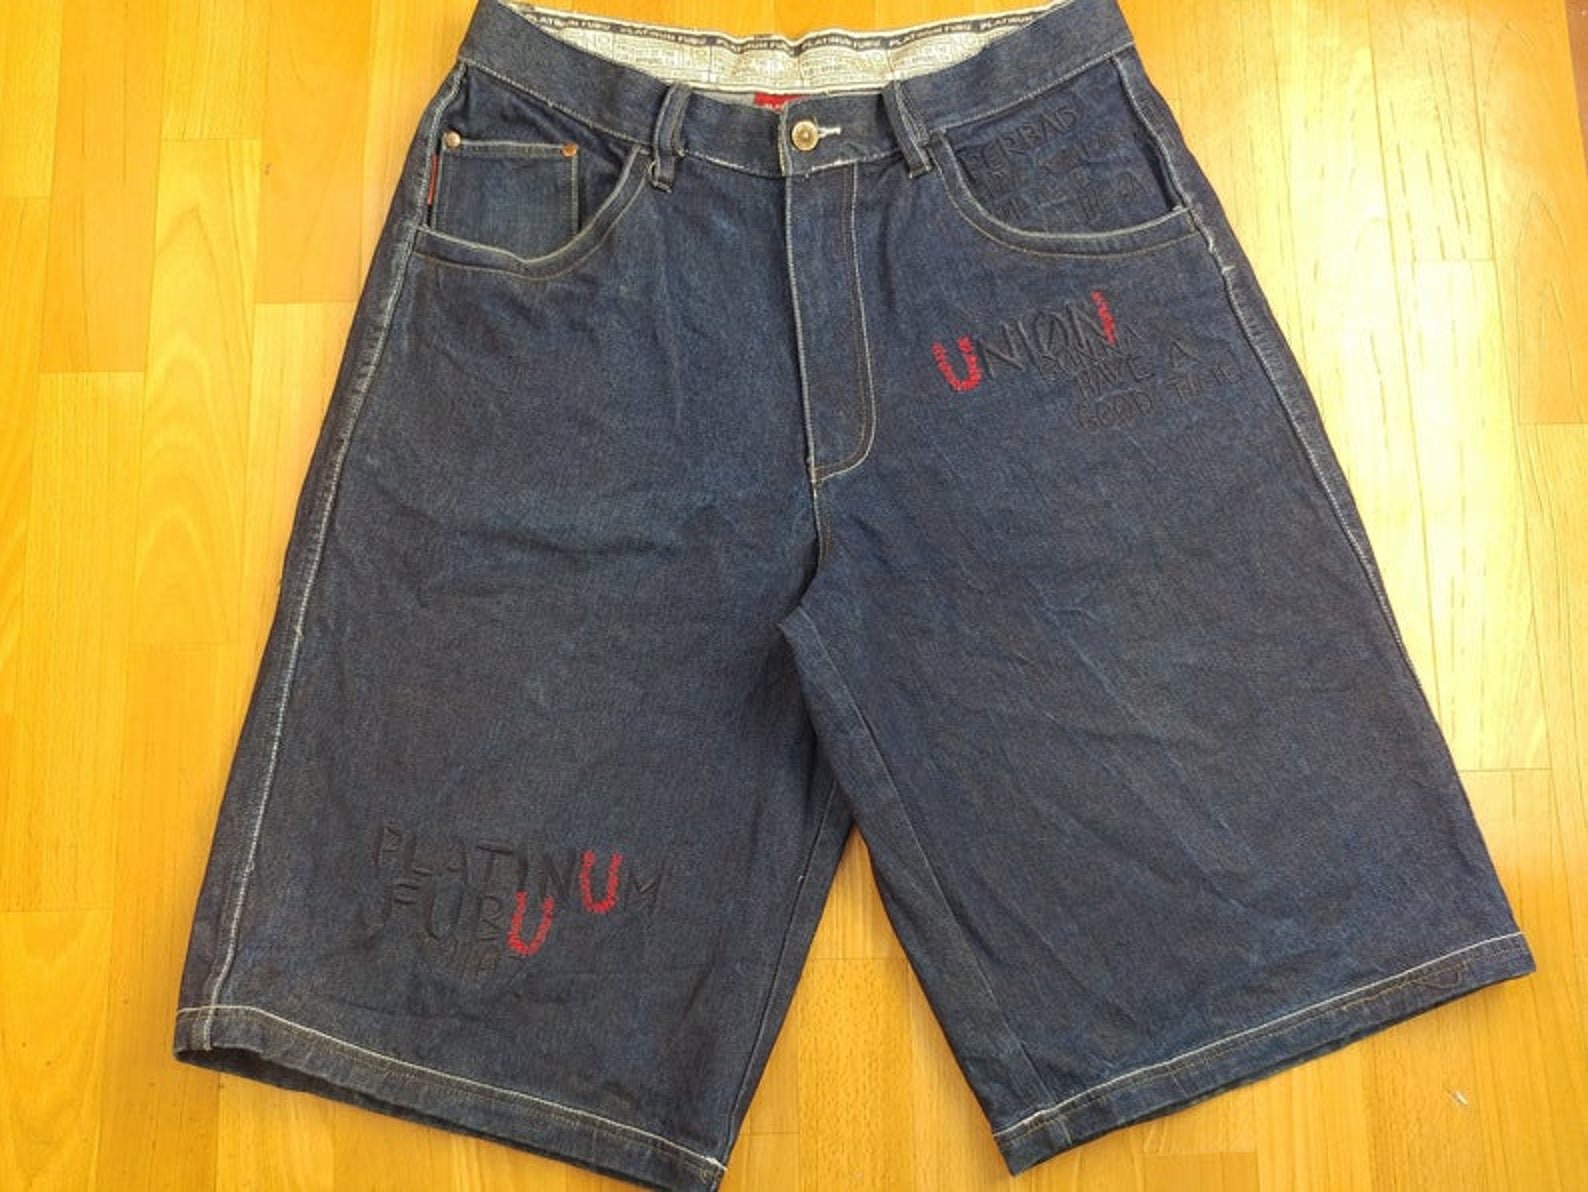 Platinum FUBU jeans shorts old school vintage baggy denim | Etsy